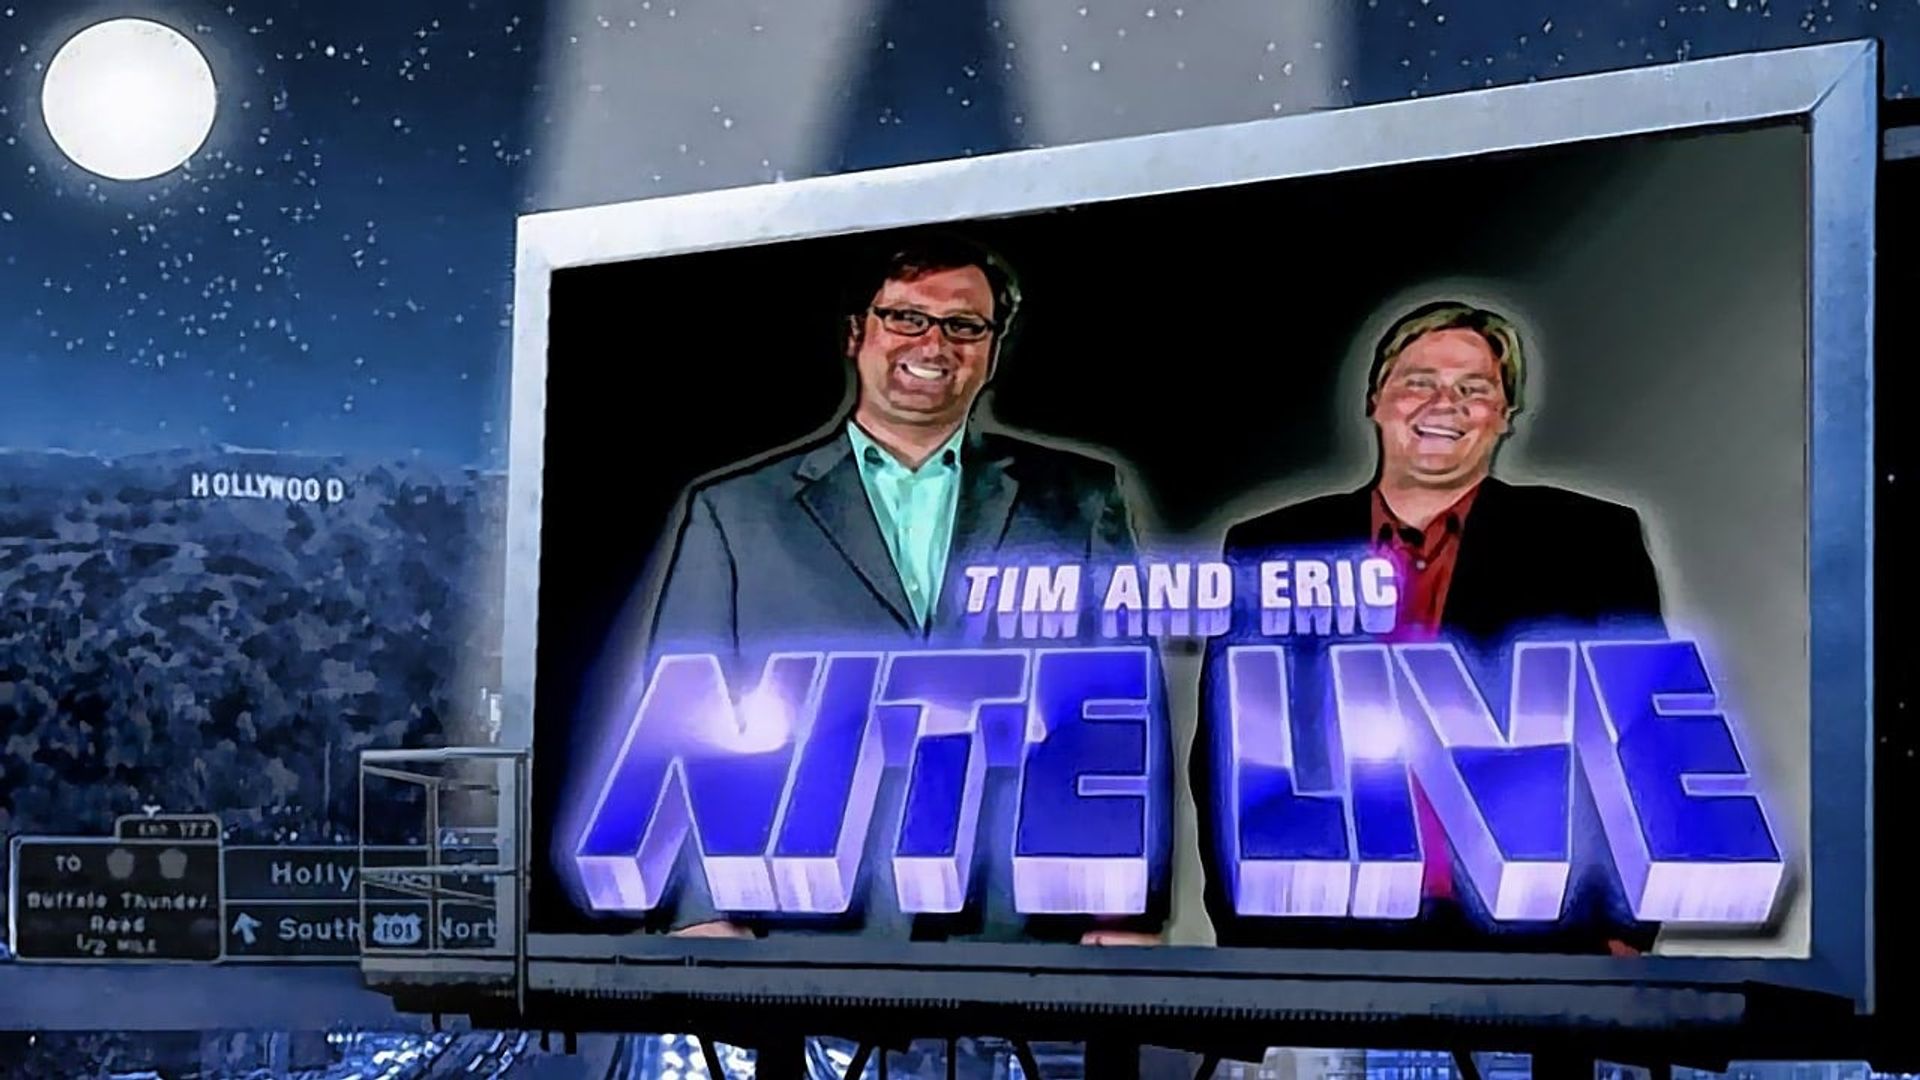 Tim and Eric Nite Live background